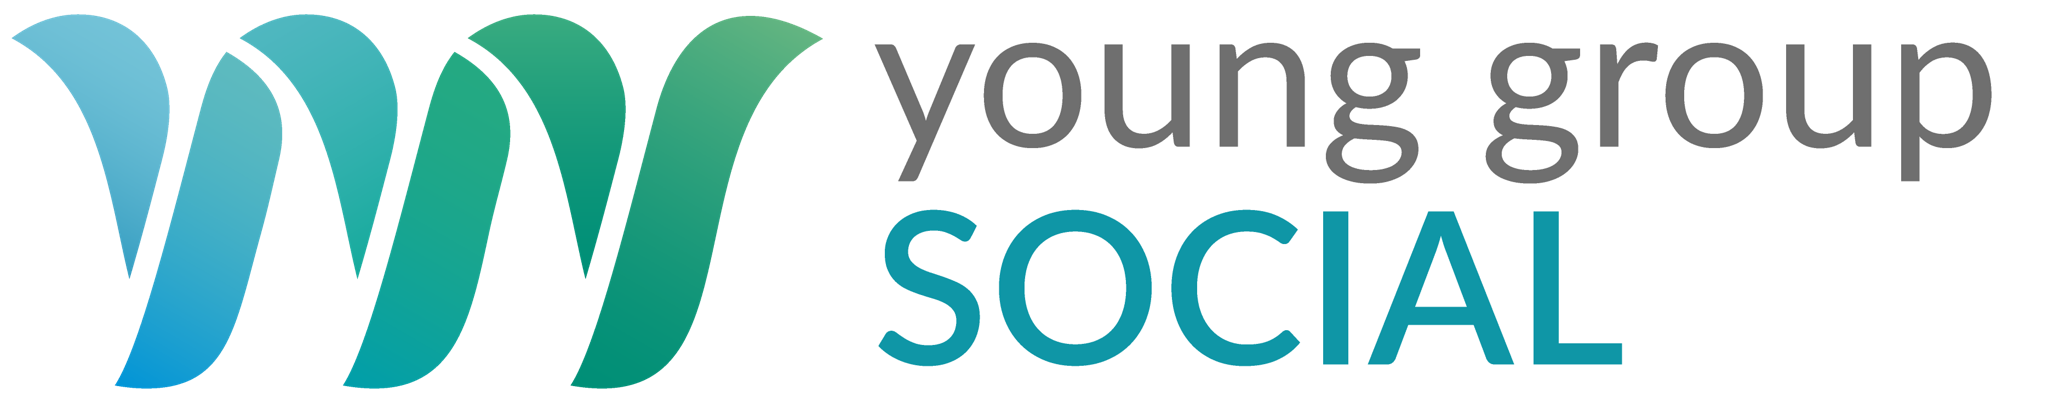 YOUSOCIAL логотип. Yang Group. Young Society. Project Group logo.